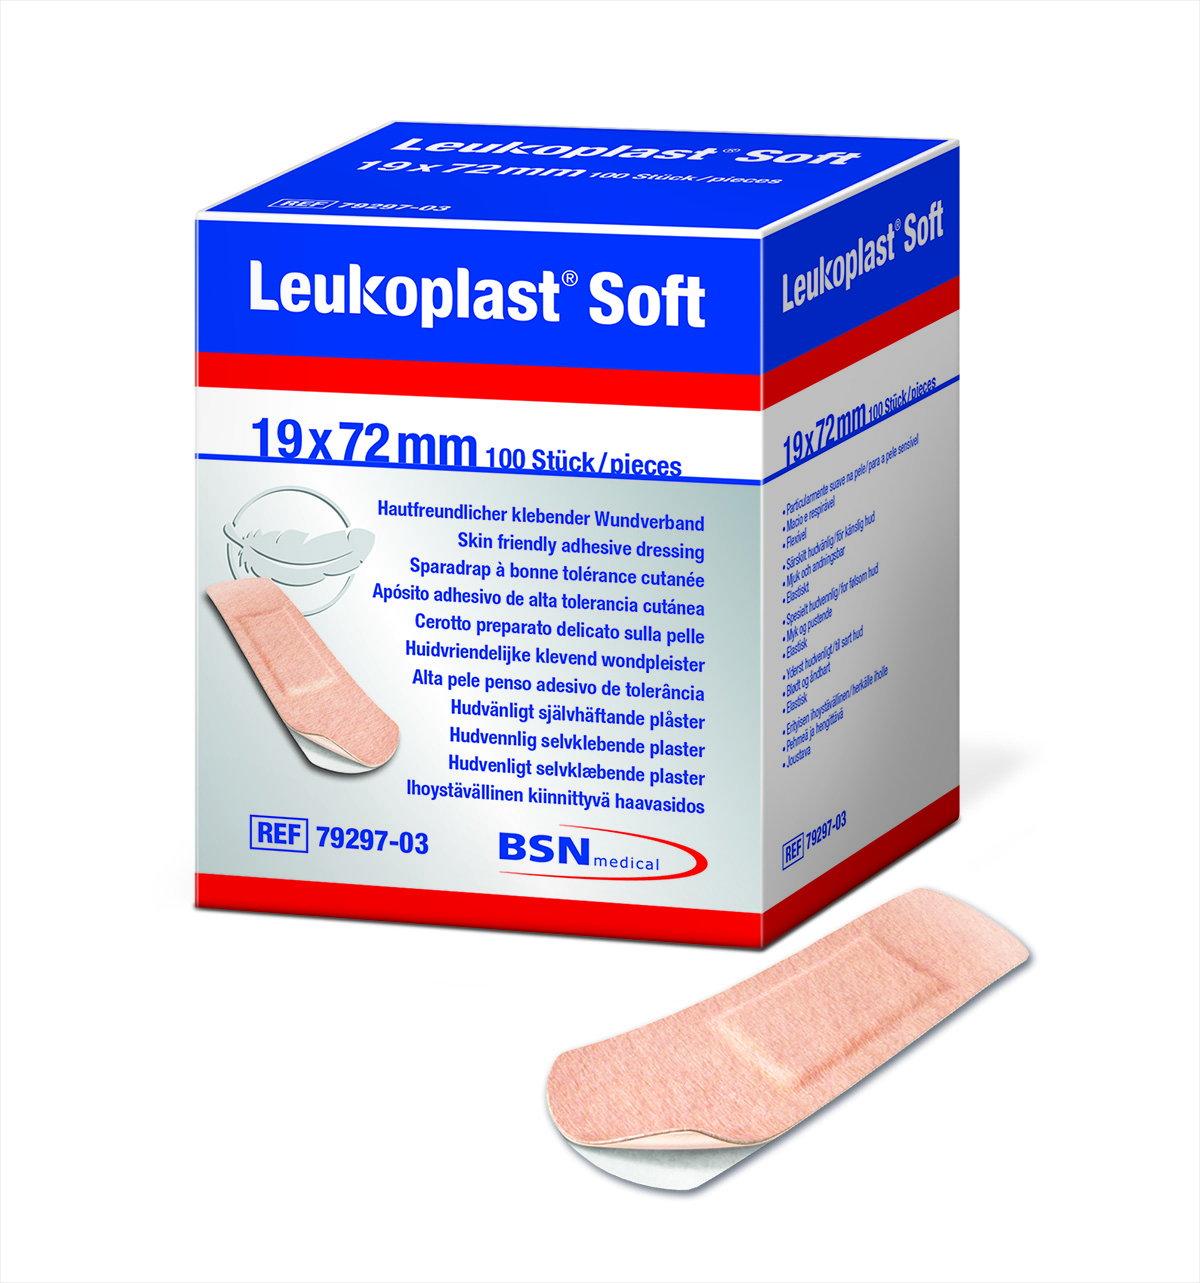 Leukoplast® soft Fingerstrips